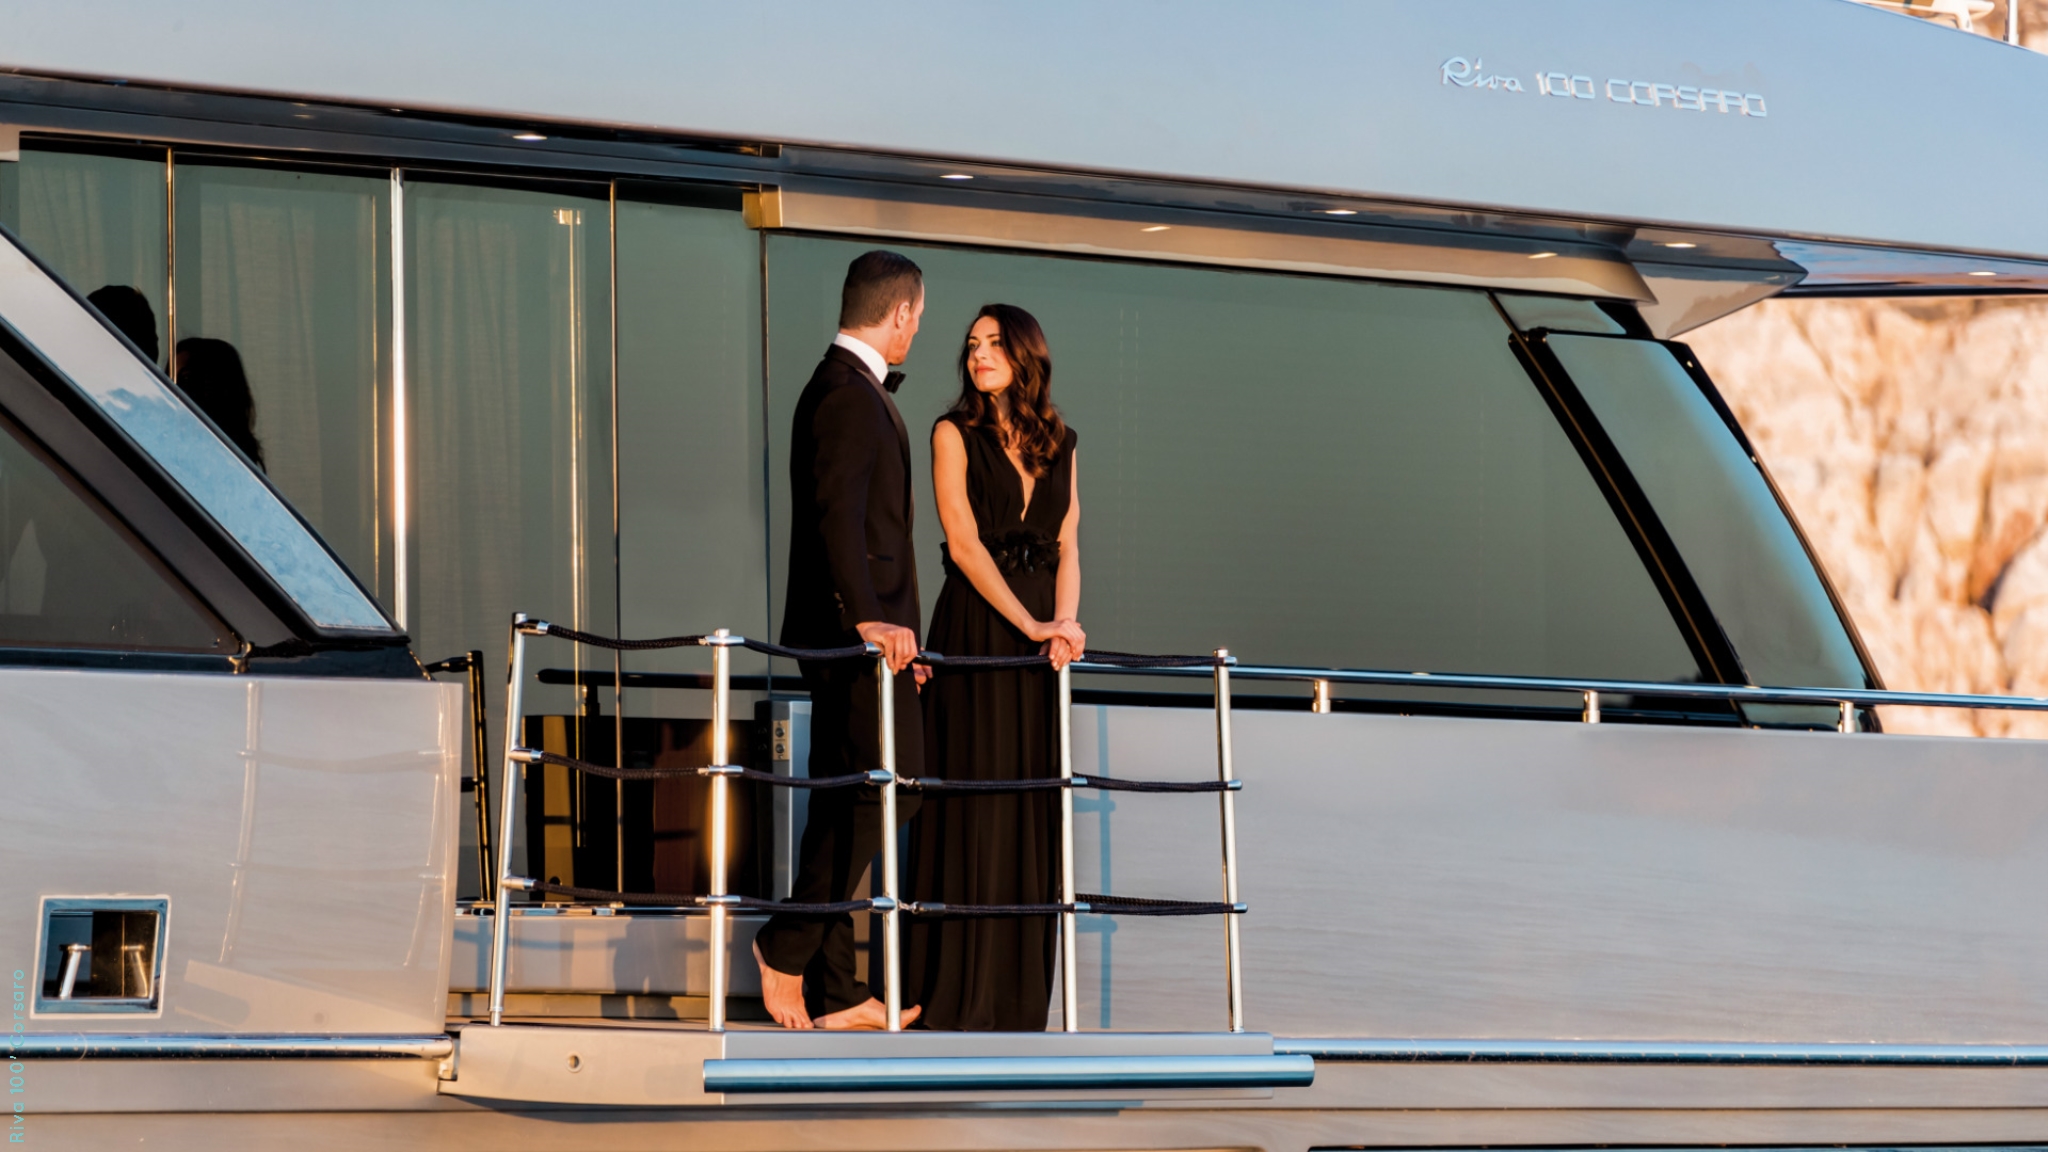 Riva 100 Crosaro Yacht - Couple On Board - Lifestyle 